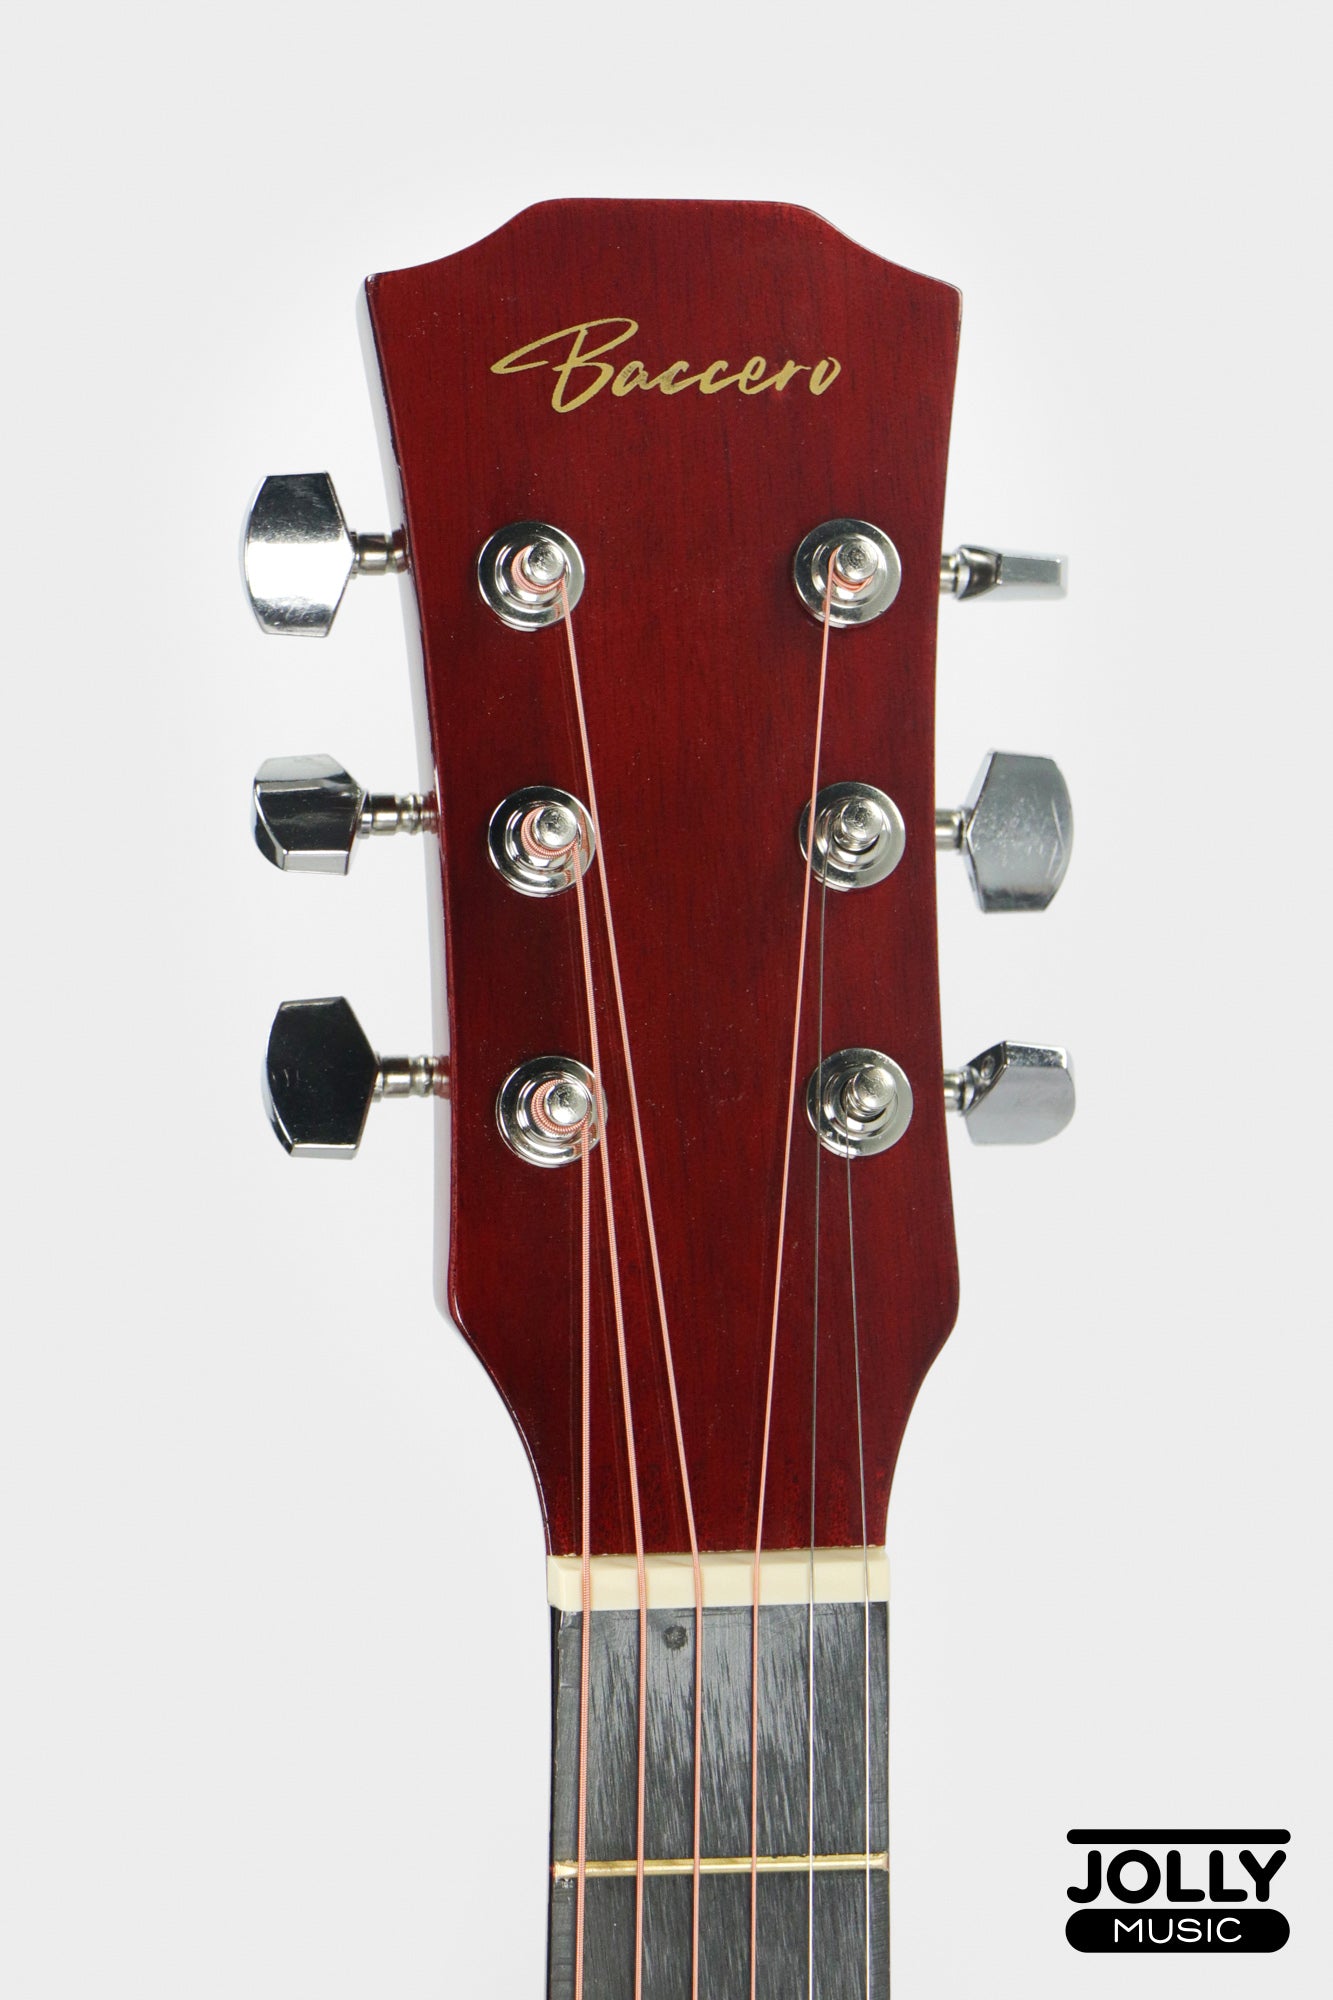 Baccero 38" Guitar K-38LT Truss Rod w/ Case, 3 Picks, Tuner, Capo - Sunburst